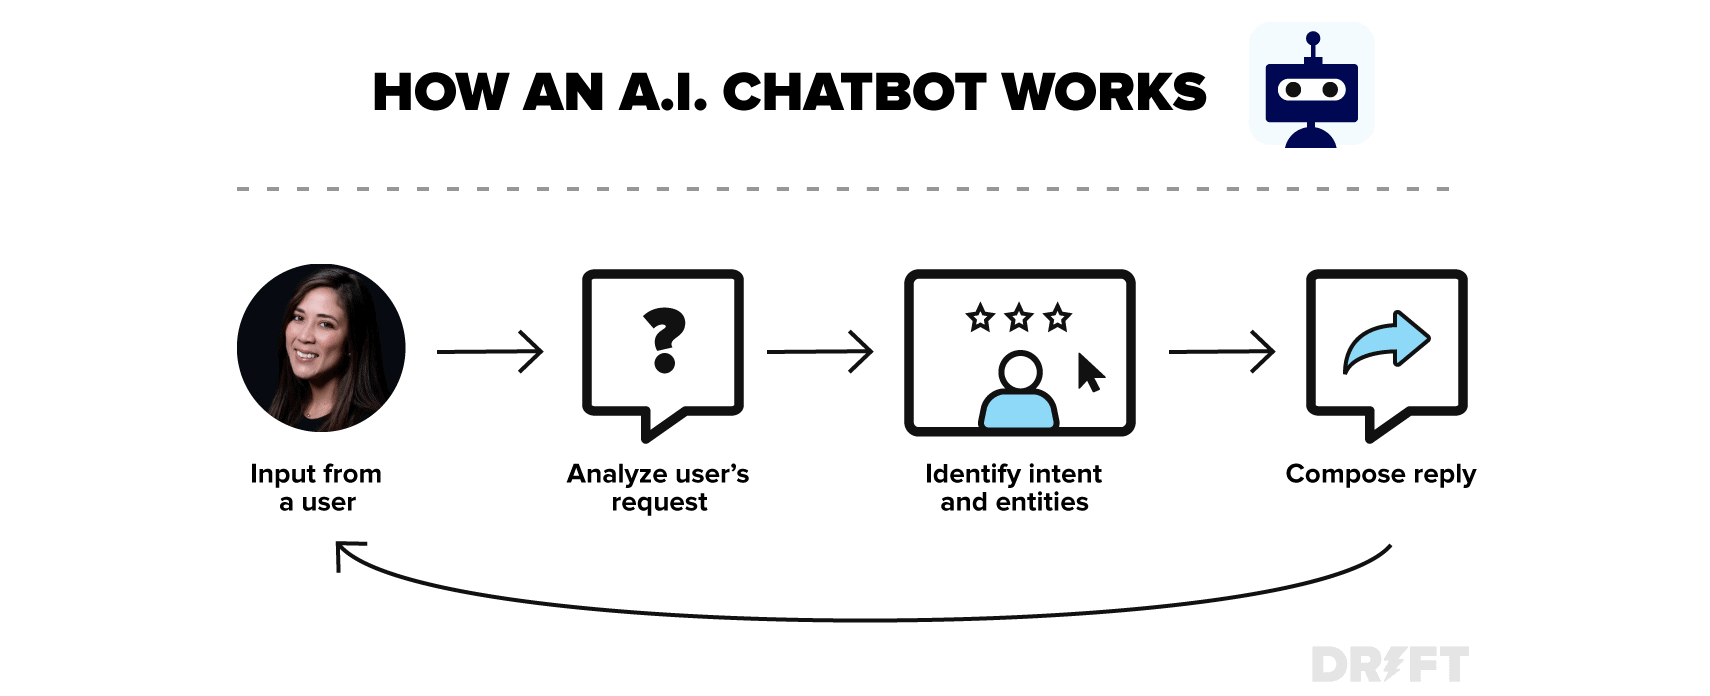 AI chatbot